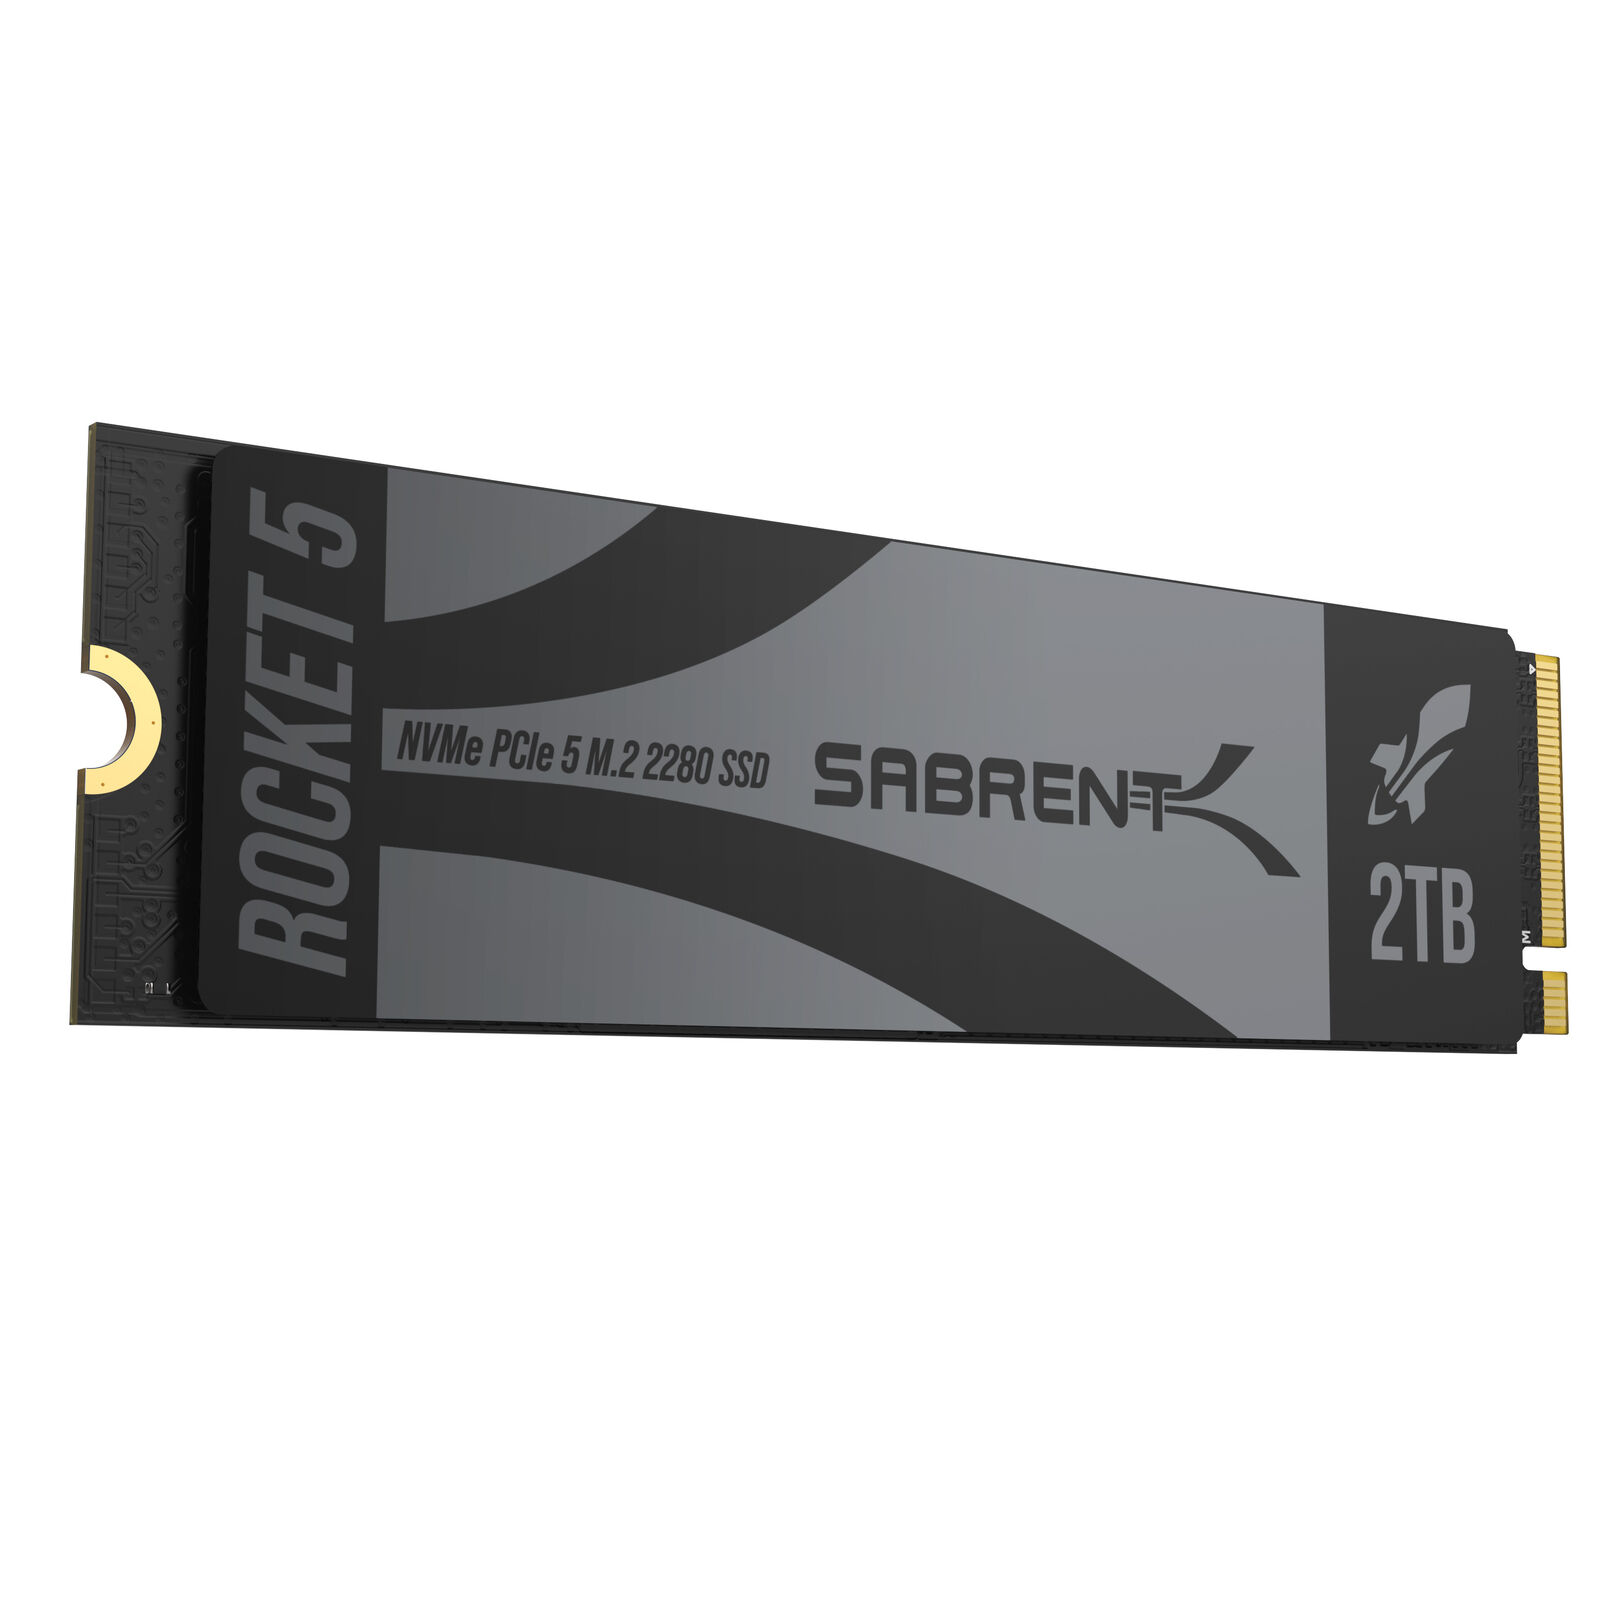 SABRENT Rocket 5 2TB Advanced Performance M.2 PCIe GEN 5 14GB/s X4 NVMe SSD